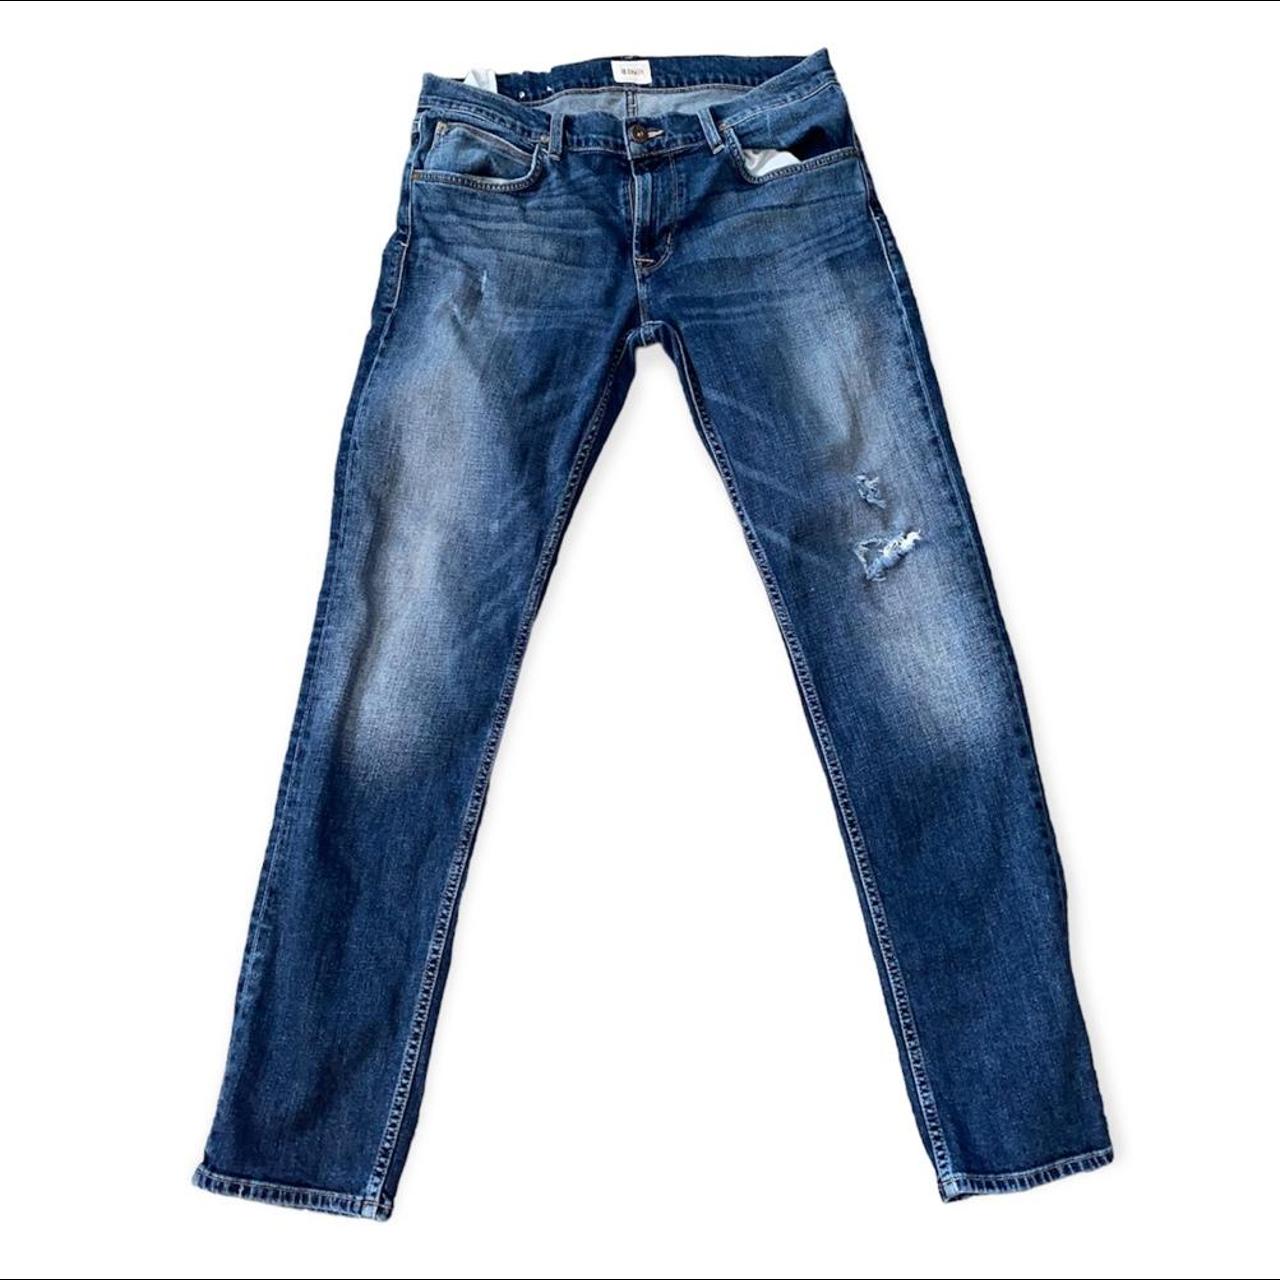 Hudson Jeans Men's Blue and White Jeans